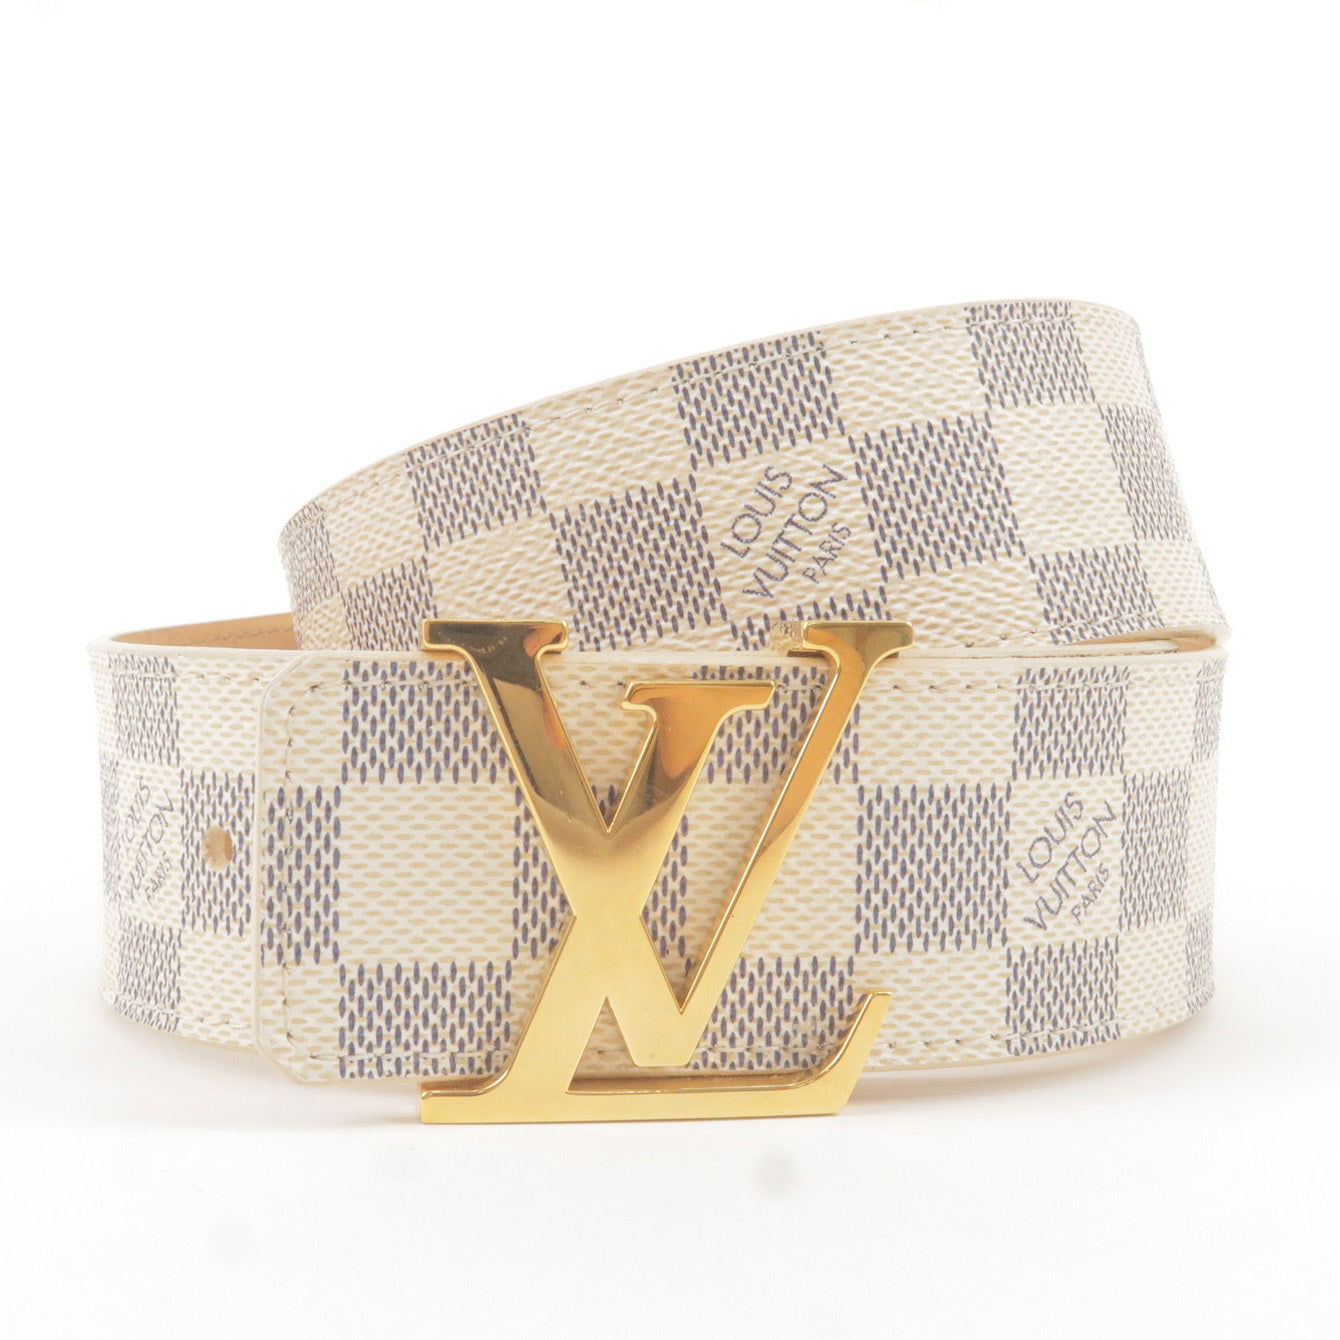 Vuitton - Saint - Louis - Logo - LV - M9609 – dct - 80/32 - Her outfit is  also Louis Vuitton - Damier - Azur - Belt - ep_vintage luxury Store - Tulle